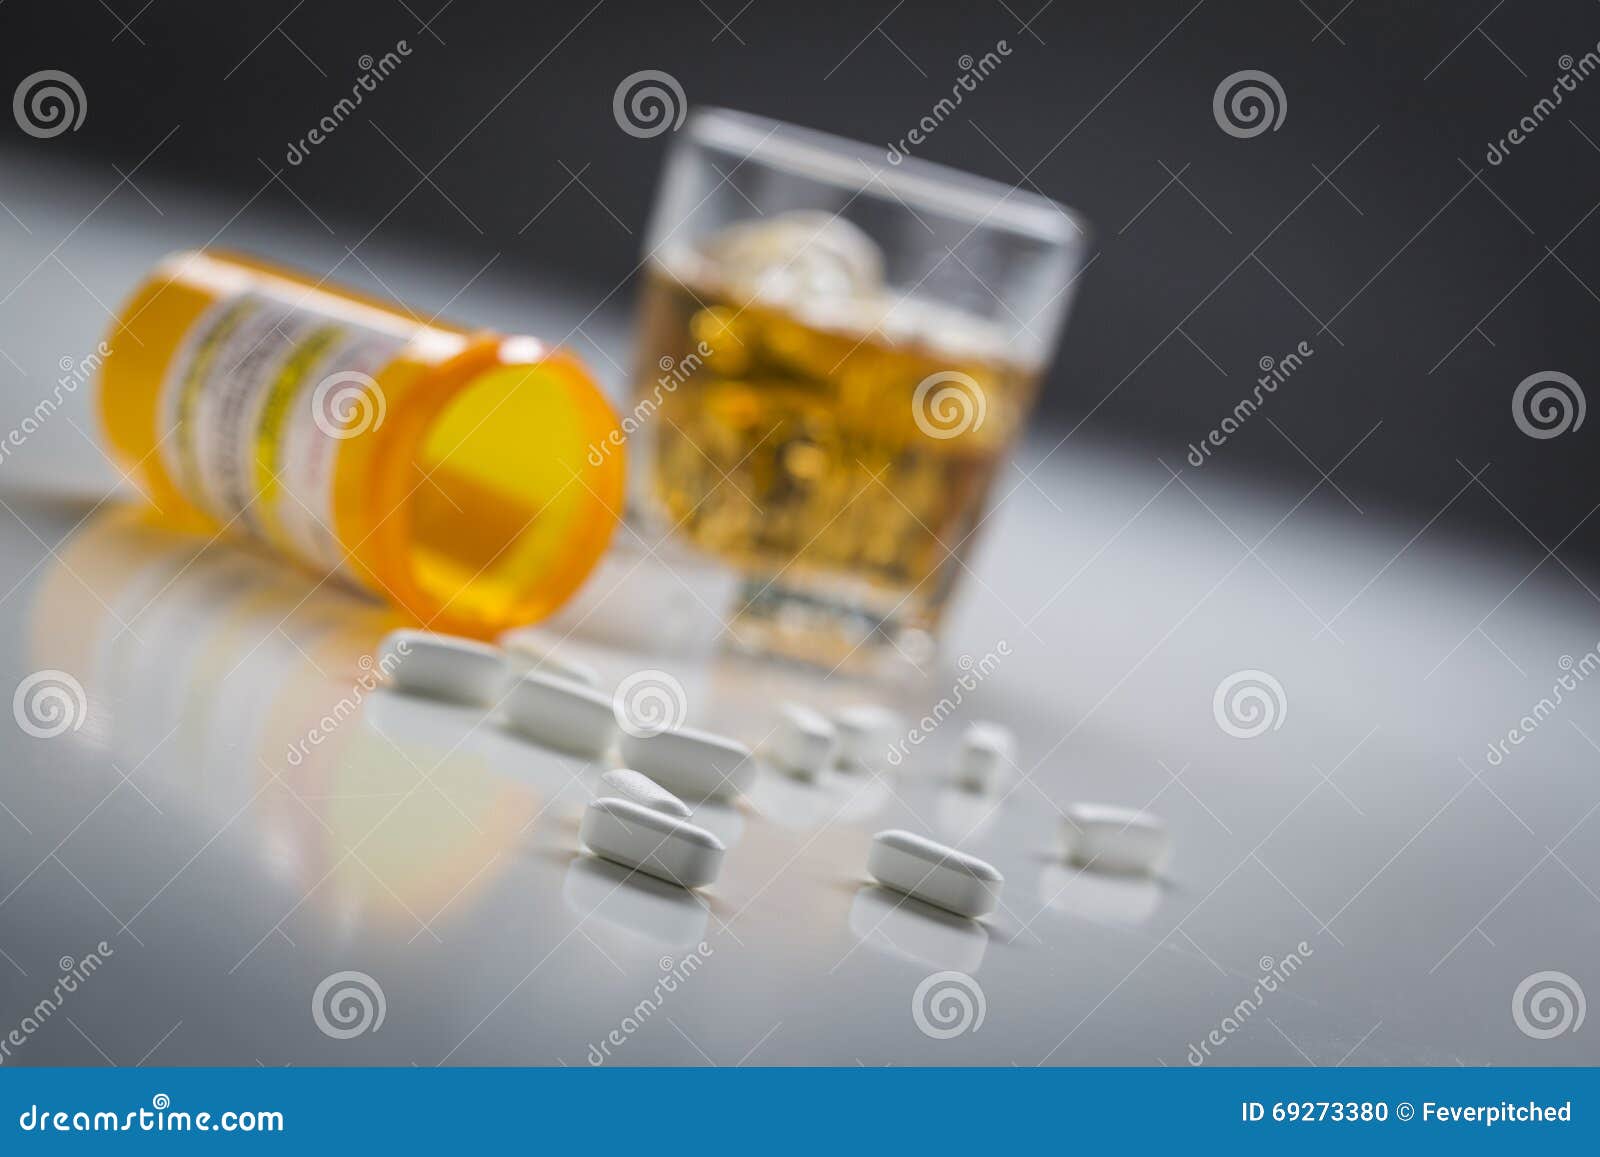 prescription drugs spilled from fallen bottle near glass of alcohol